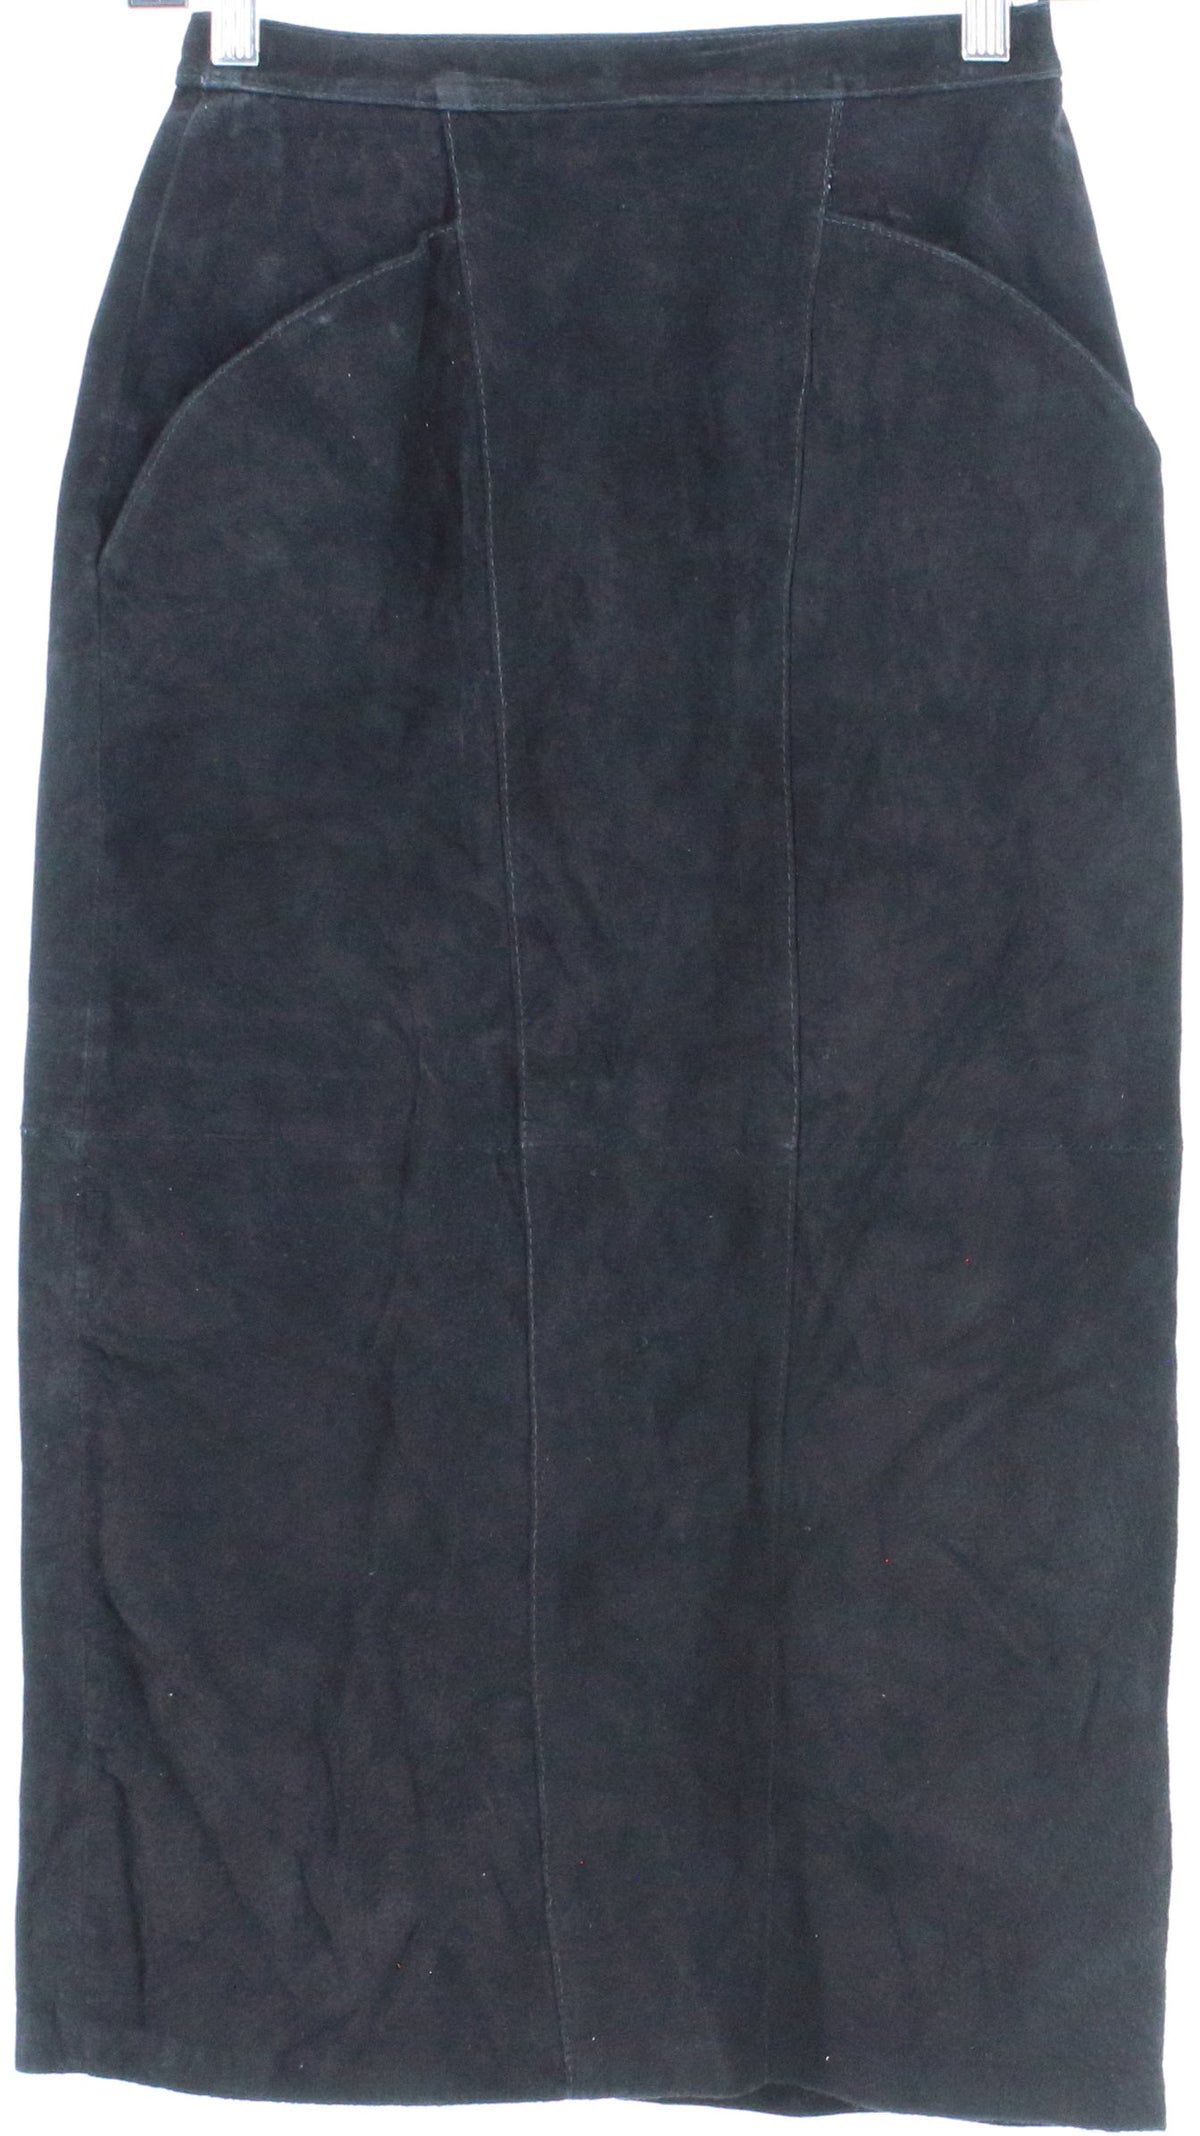 Laurice Black Leather Mid Skirt